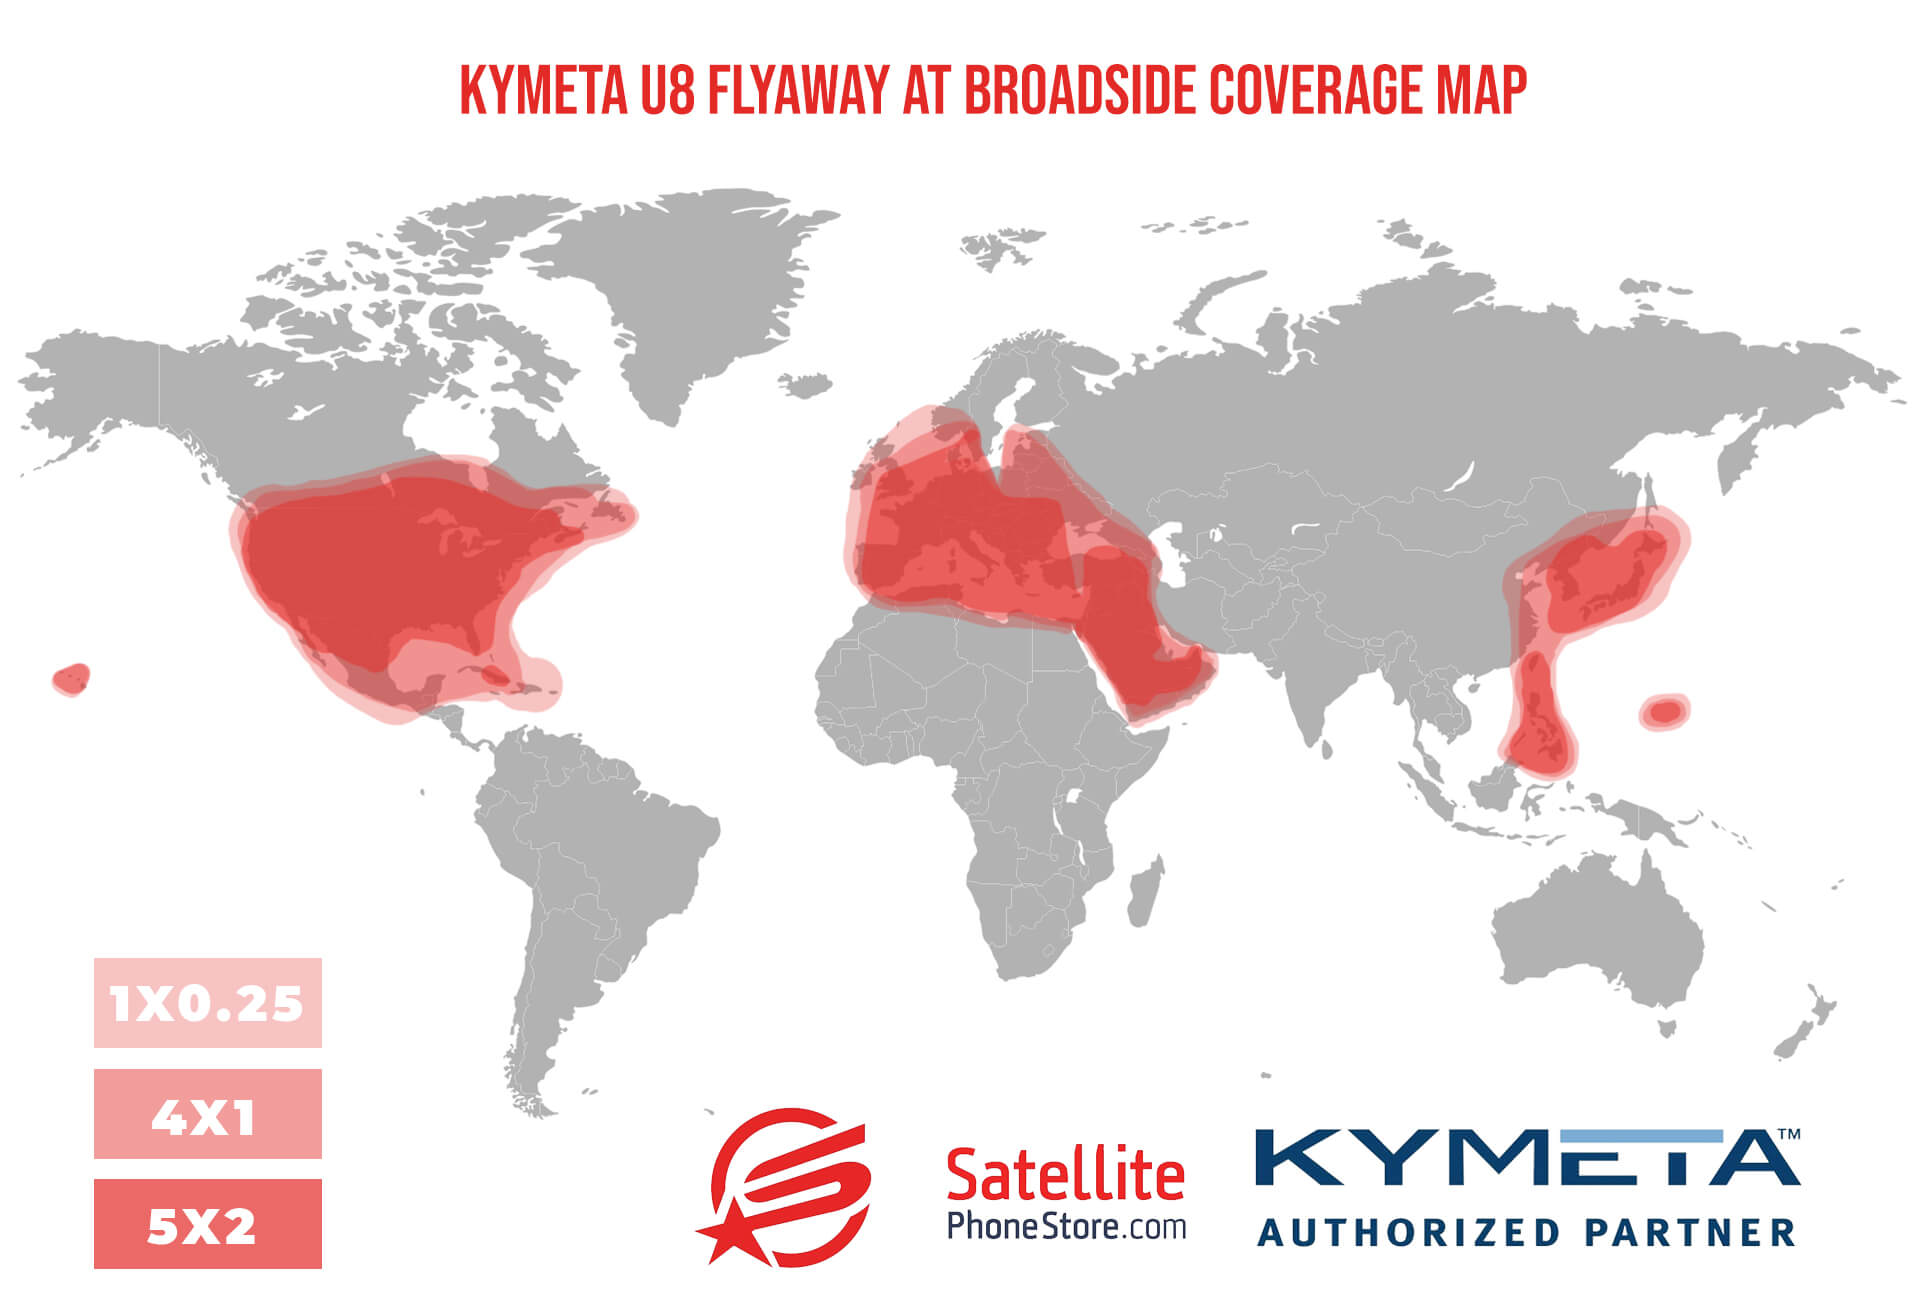 Kymeta U8 Flyaway at Broadside Coverage Map